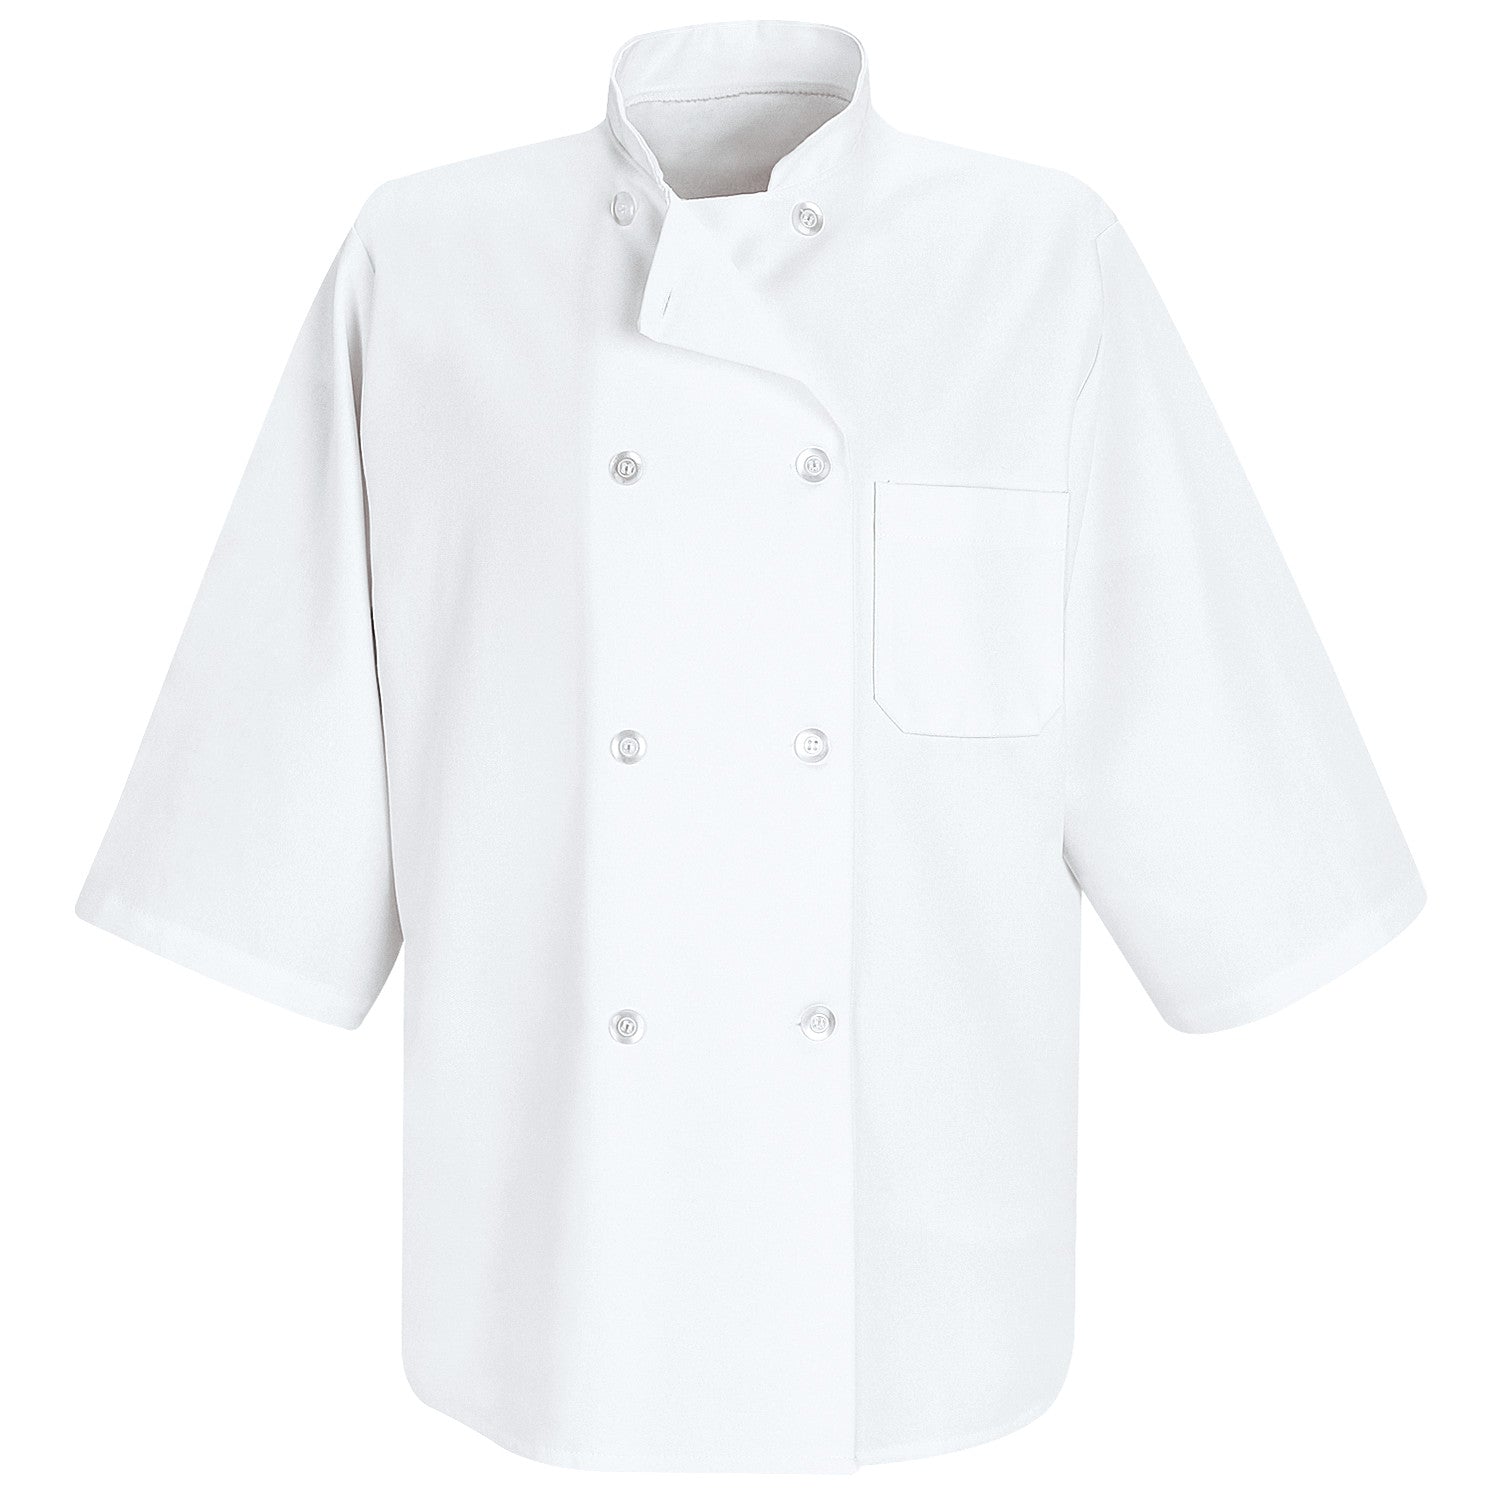 ½ Sleeve Chef Coat 0404 - White